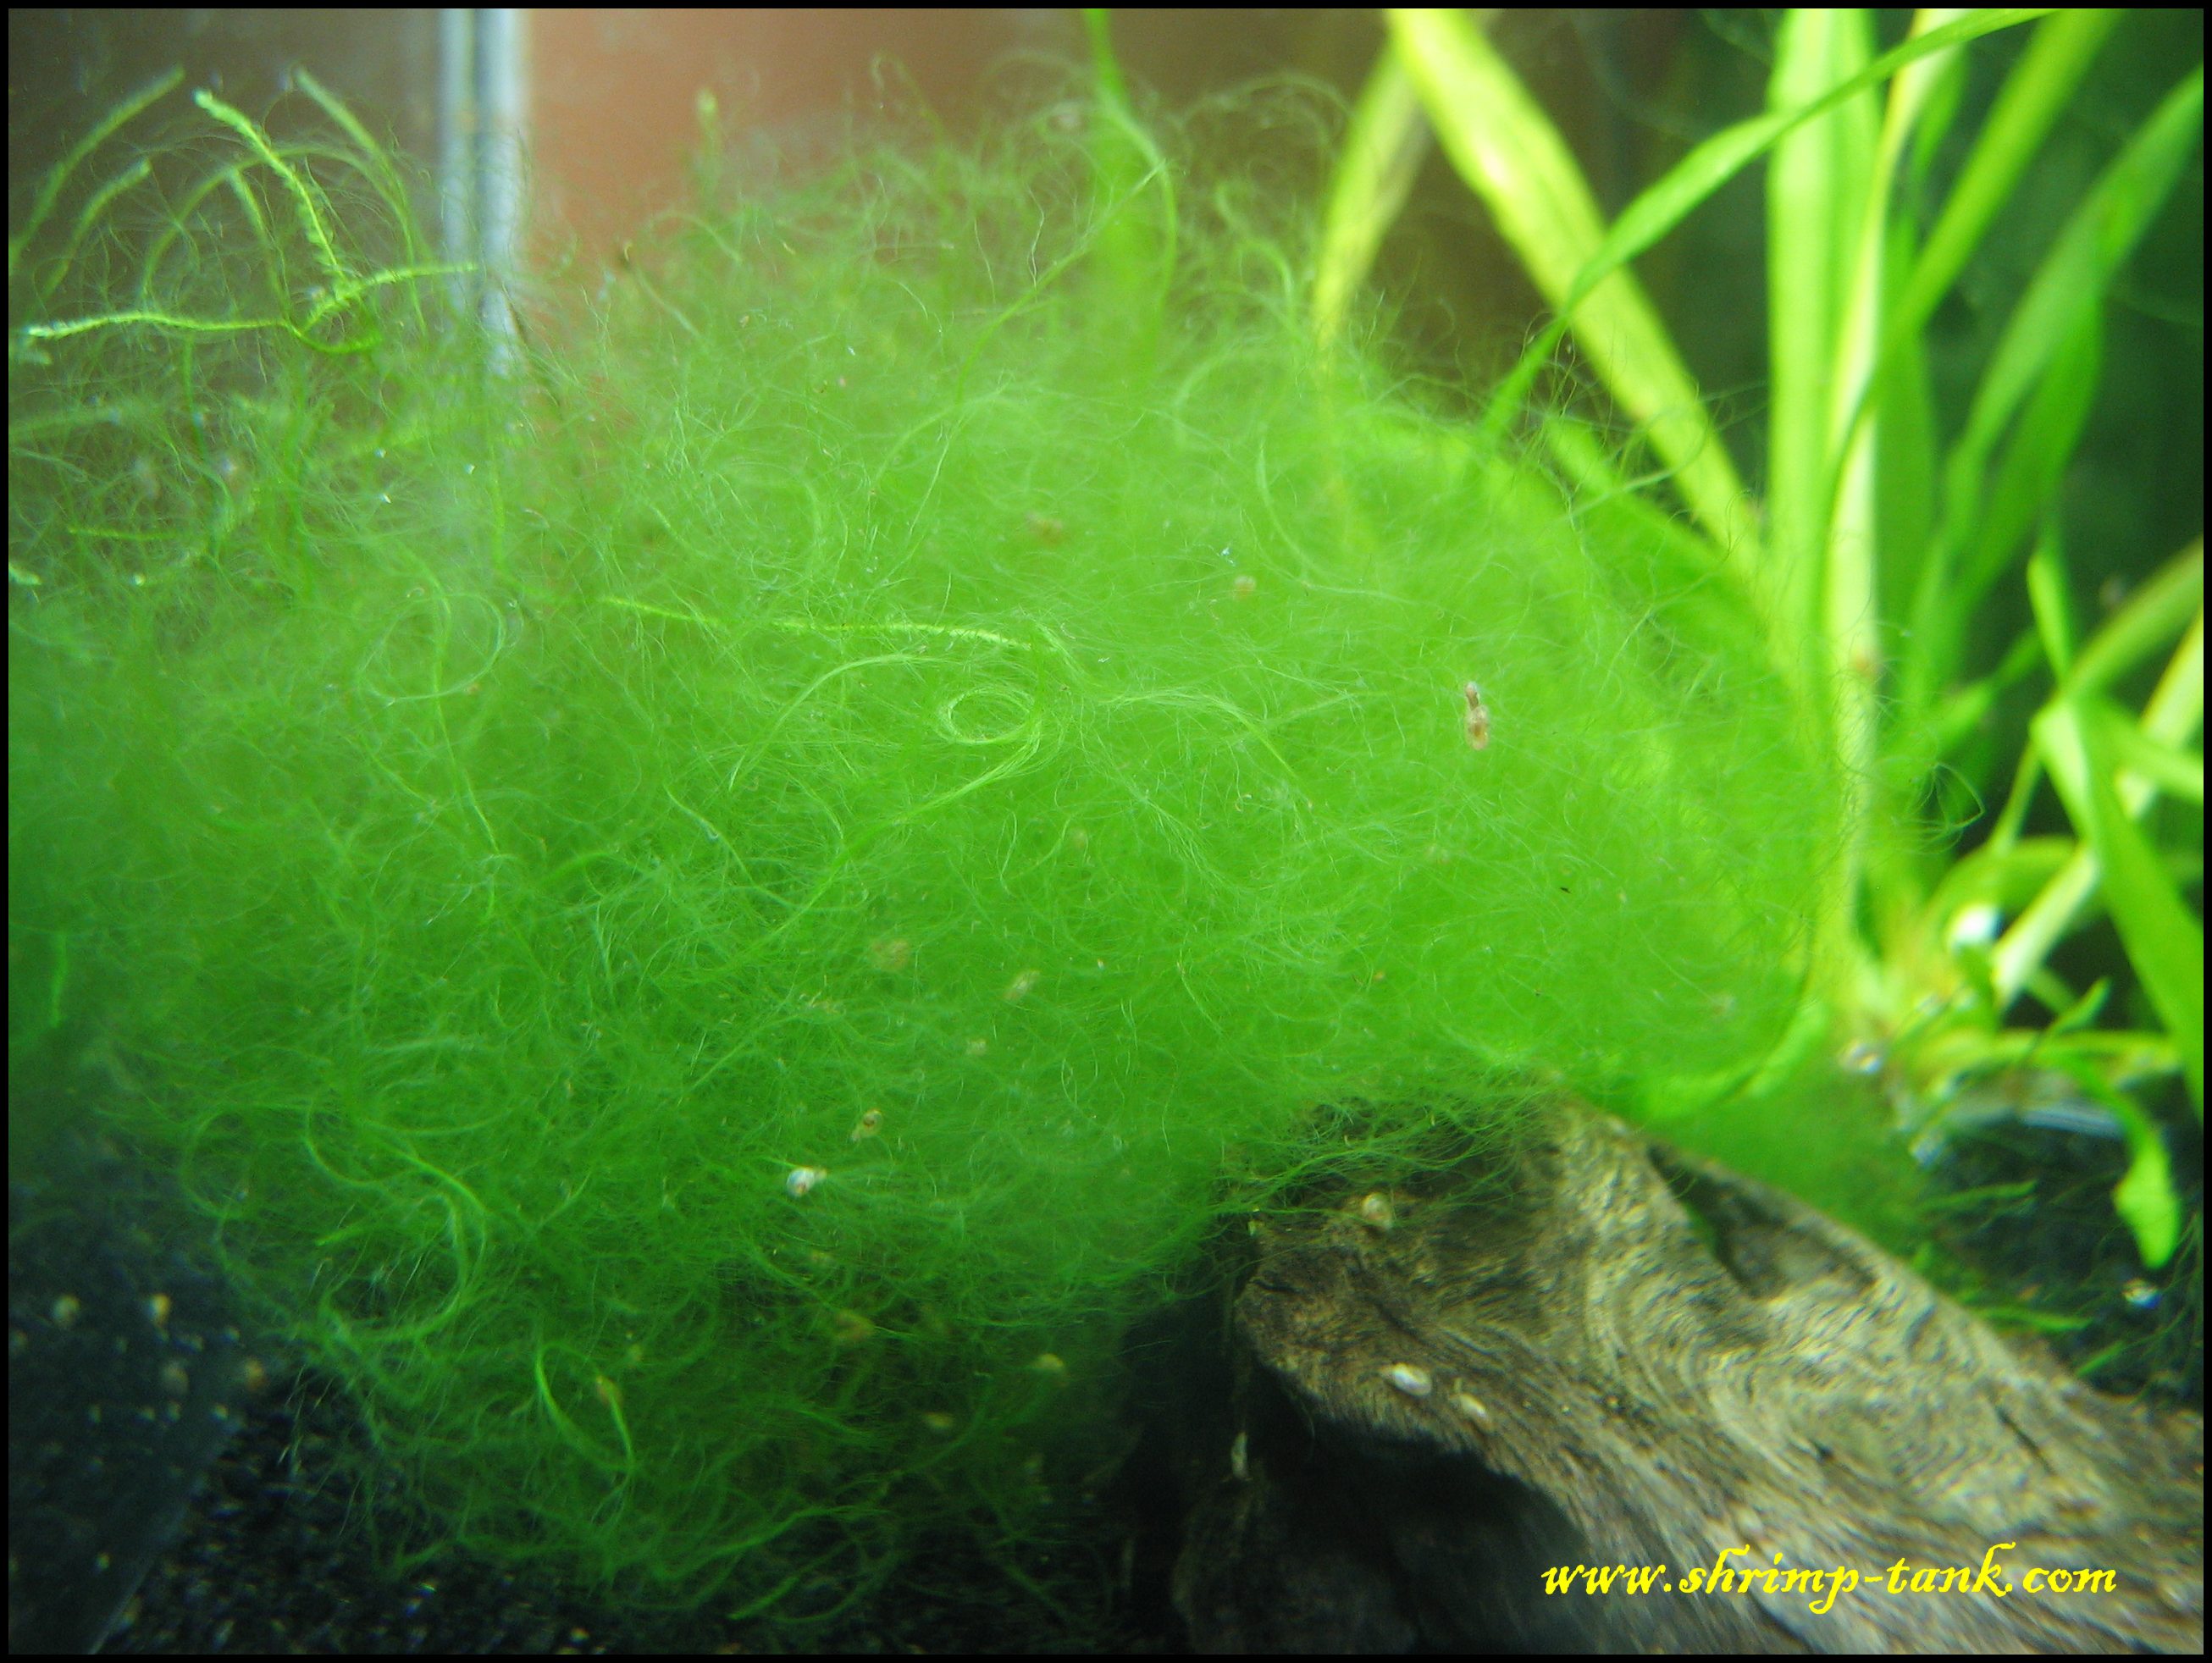 Stringy Or Thread Algae In A Shrimp Tank Shrimp Tank,Kielbasa Sausage Recipes With Vegetables